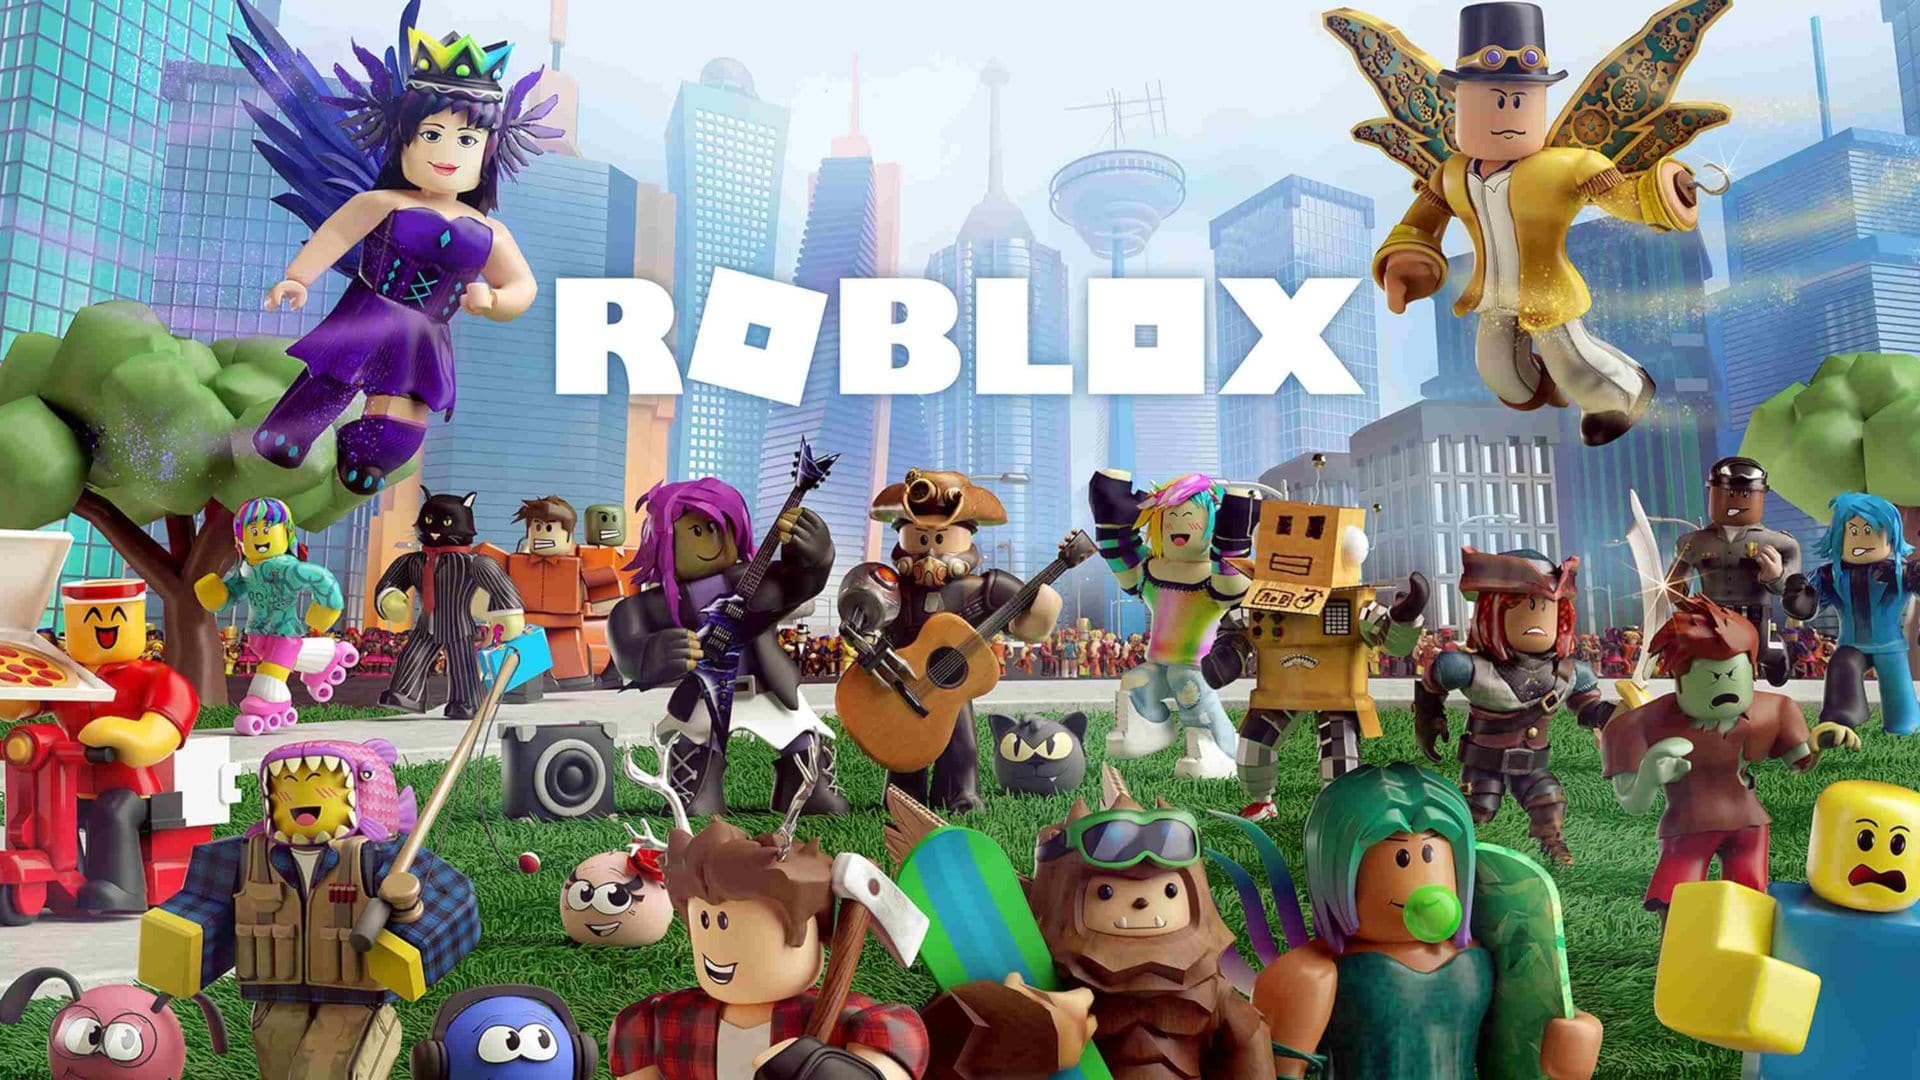 Prime Gaming anuncia parceria com Roblox - Última Ficha